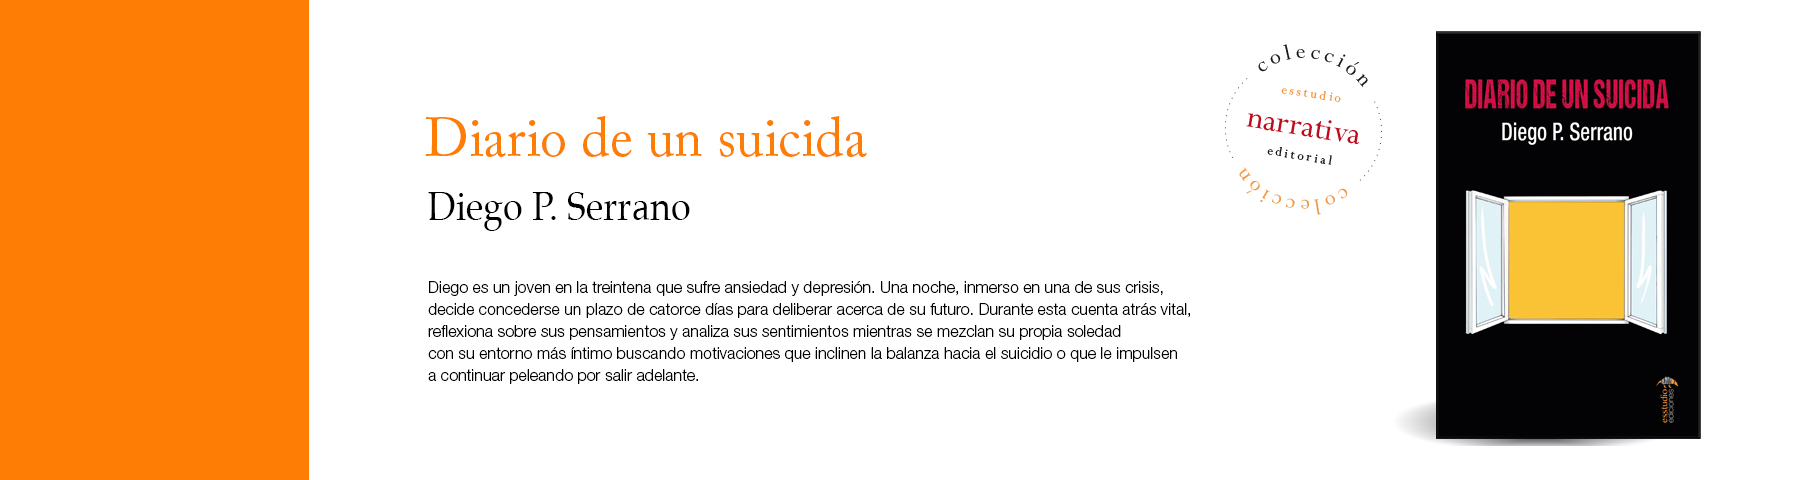 banner-diario-de-un-suicida